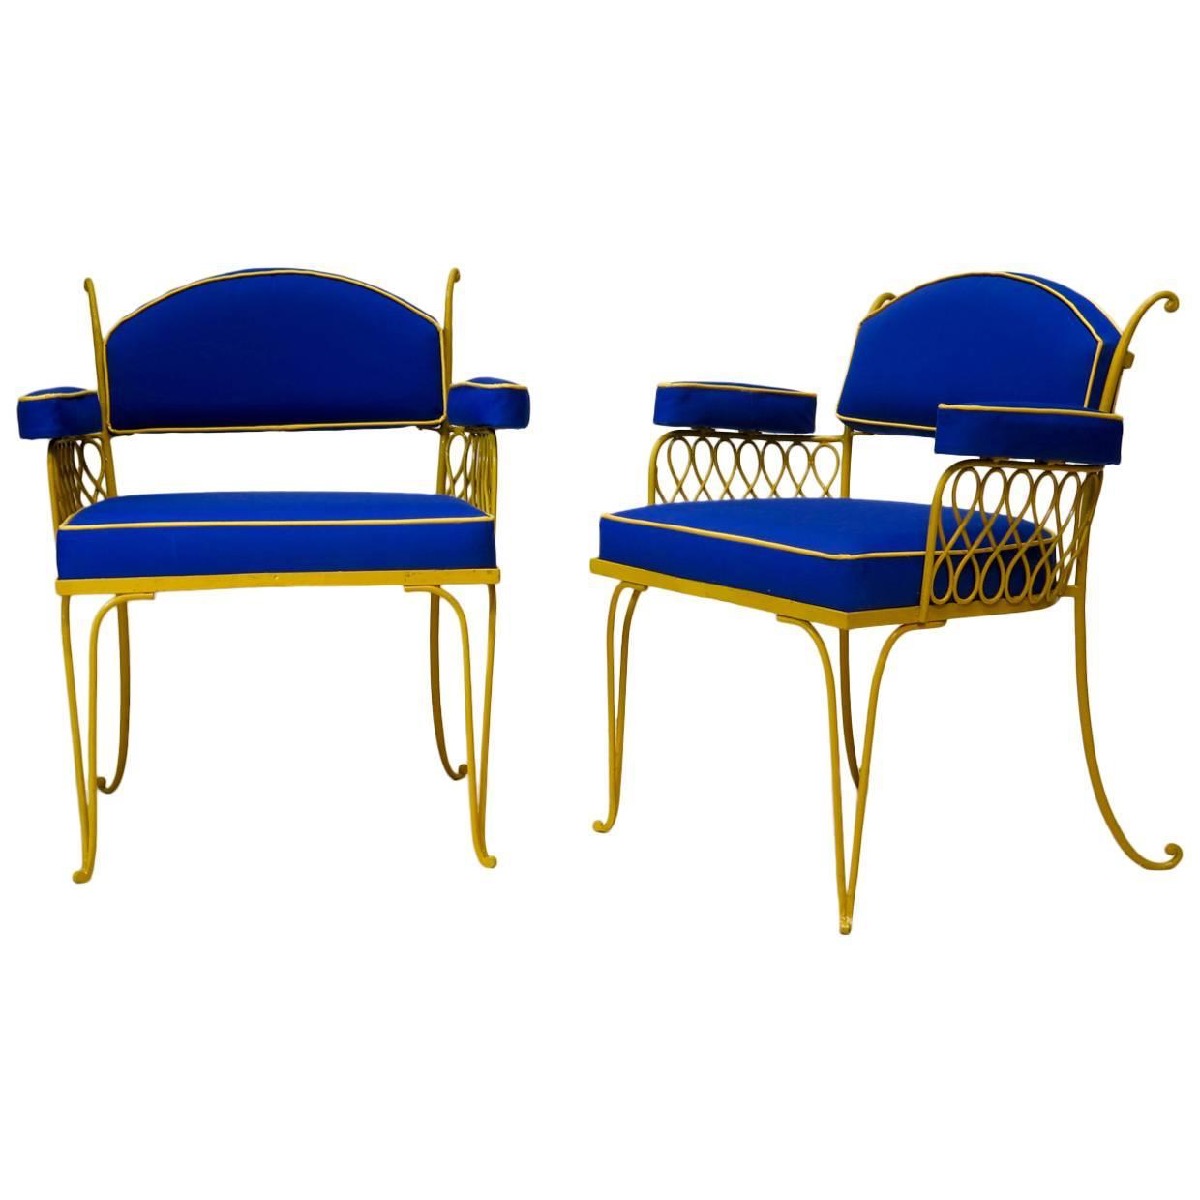 Ren   prou  set of chairs  1930 1940